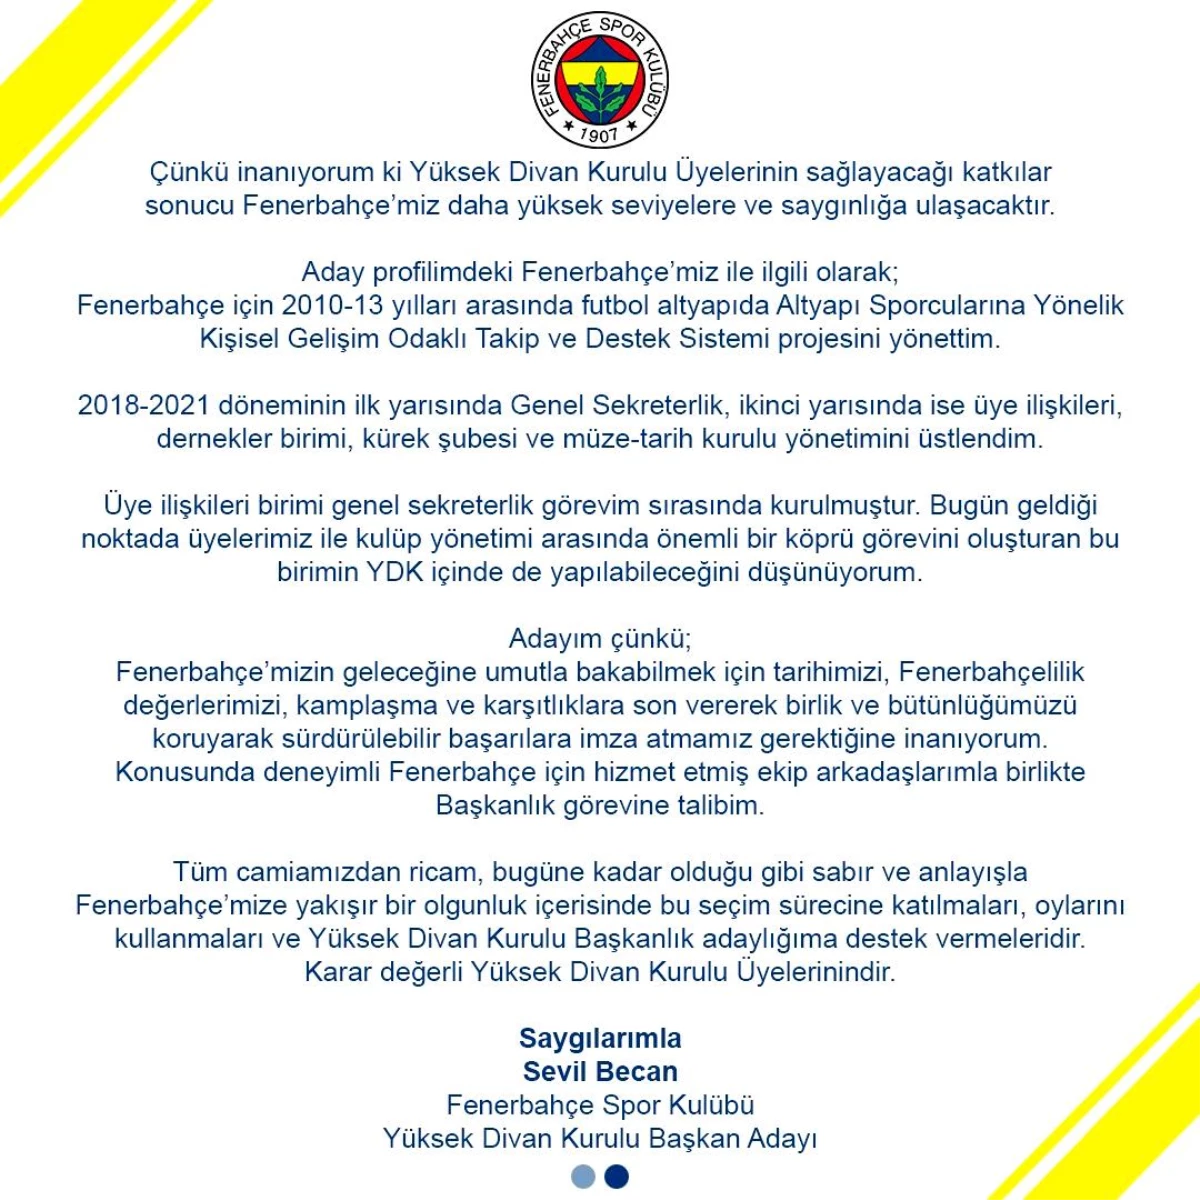 Sevil Zeynep Becan, Fenerbahçe Yüksek Divan Kurulu Başkanlığı\'na aday